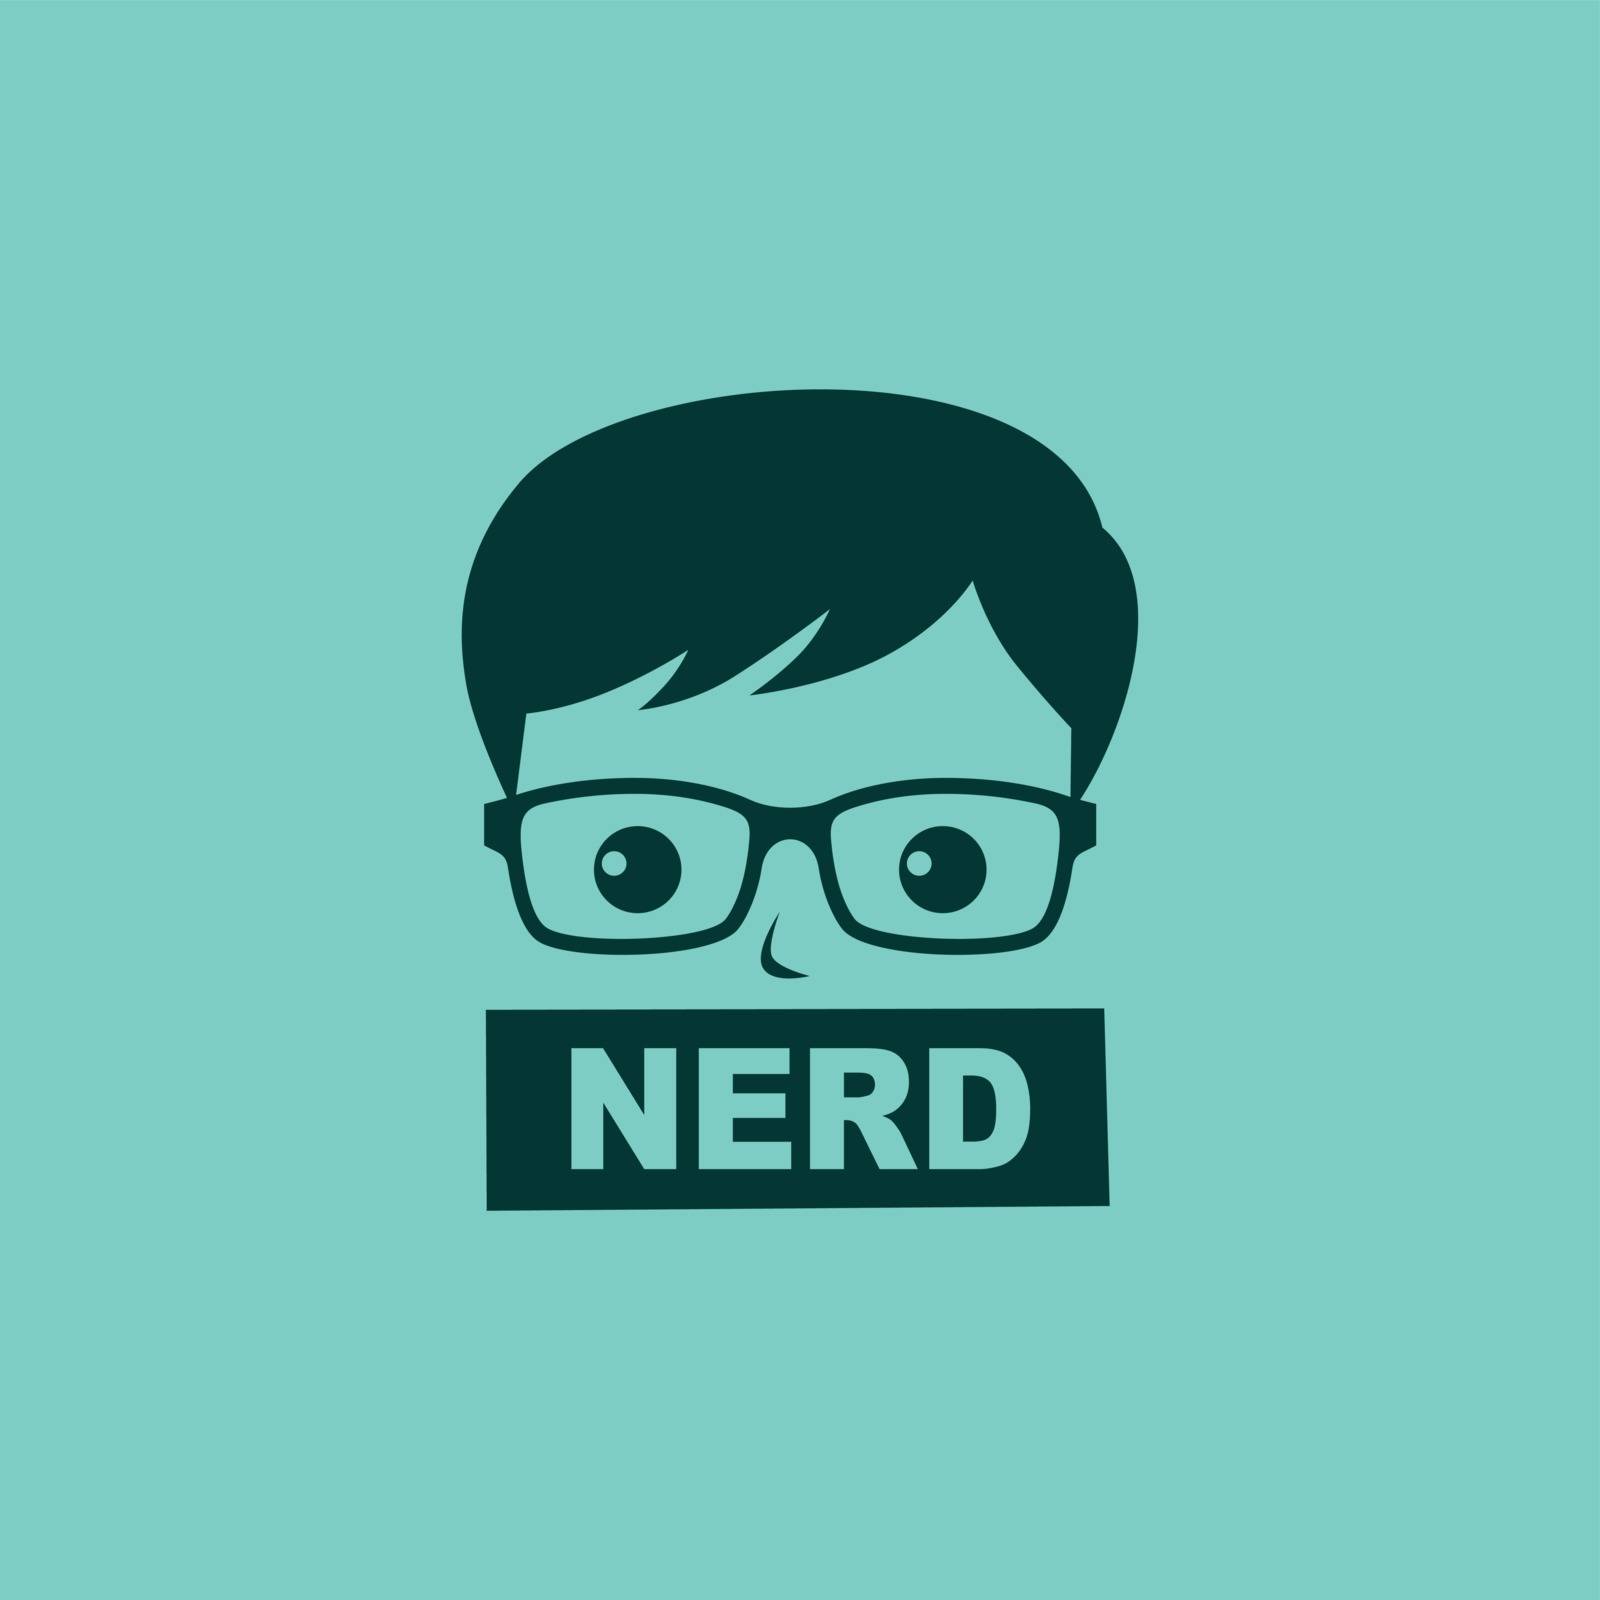 nerd geek guy cartoon character sign logo vector by vector1st